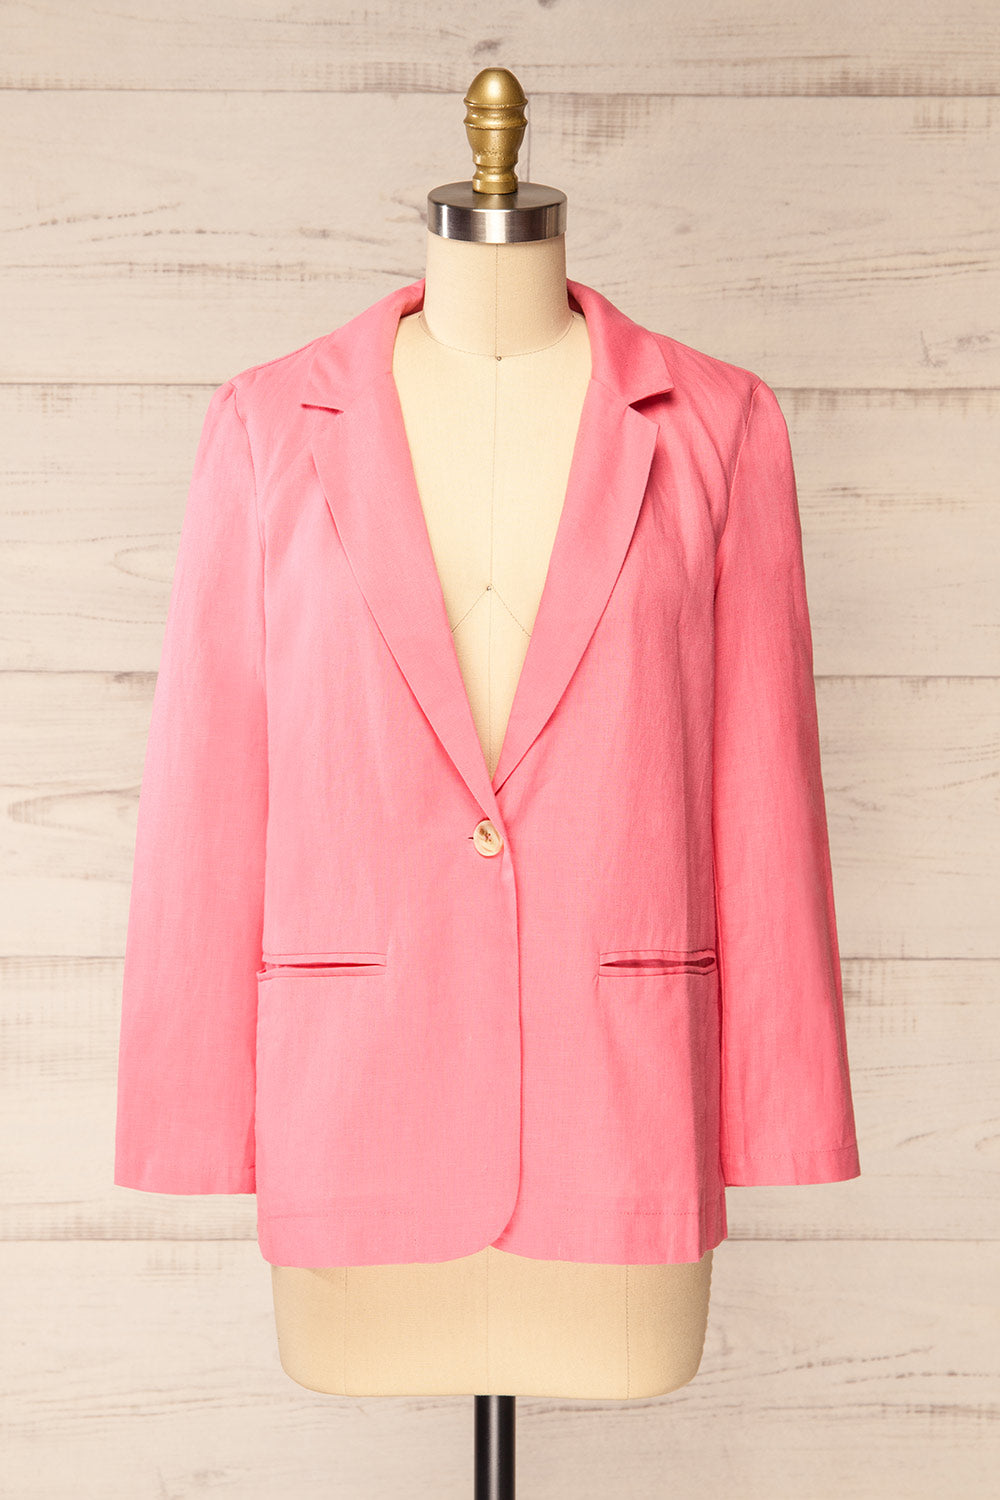 Sucunduri Pink Light Linen Blazer | La petite garçonne front view